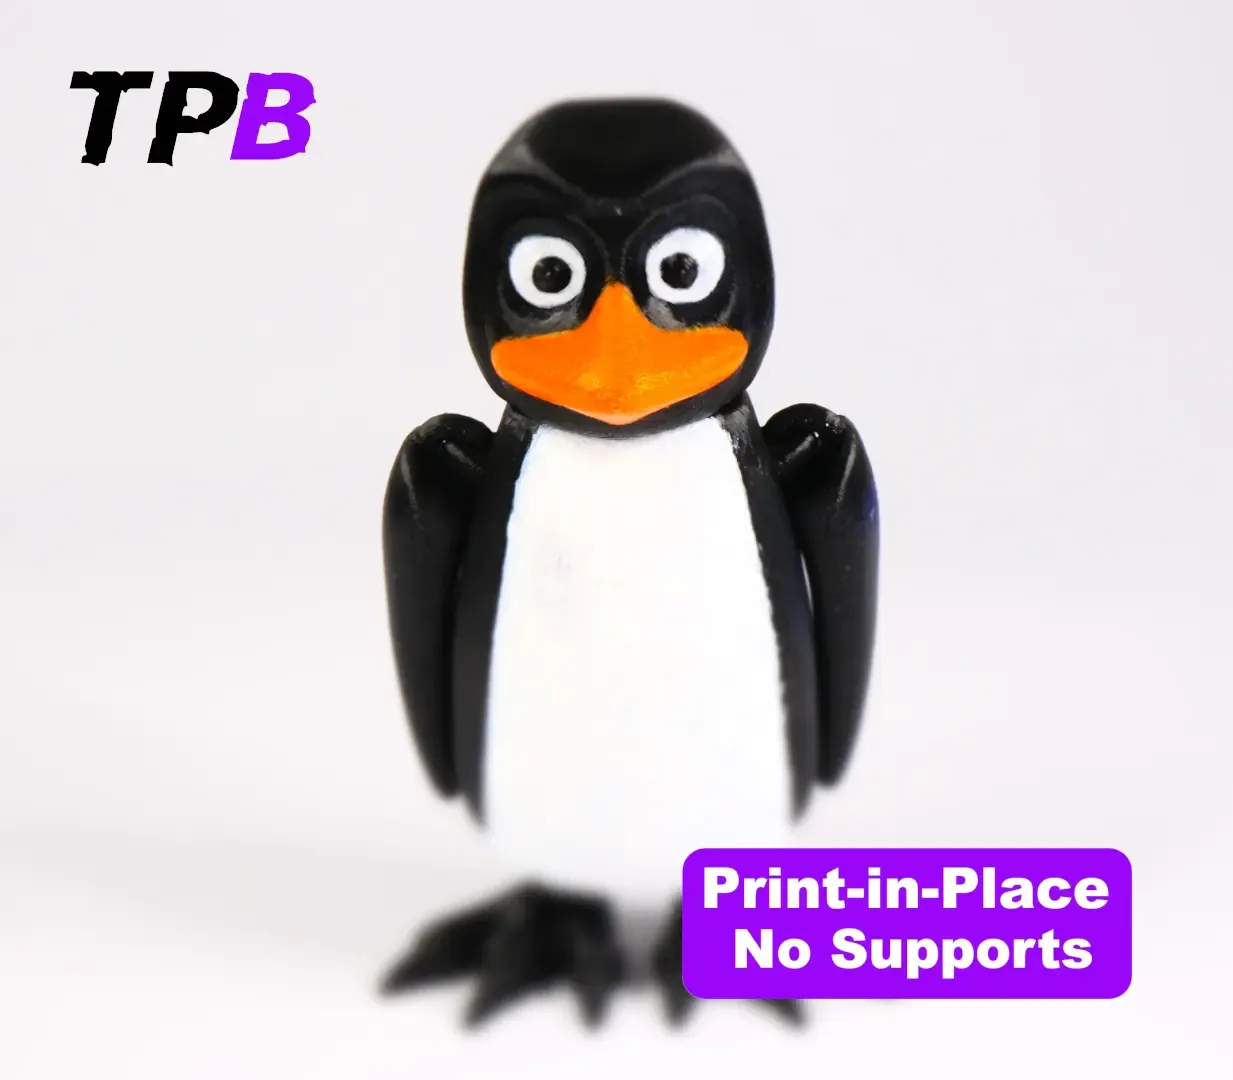 Pingu - Print-in-Place